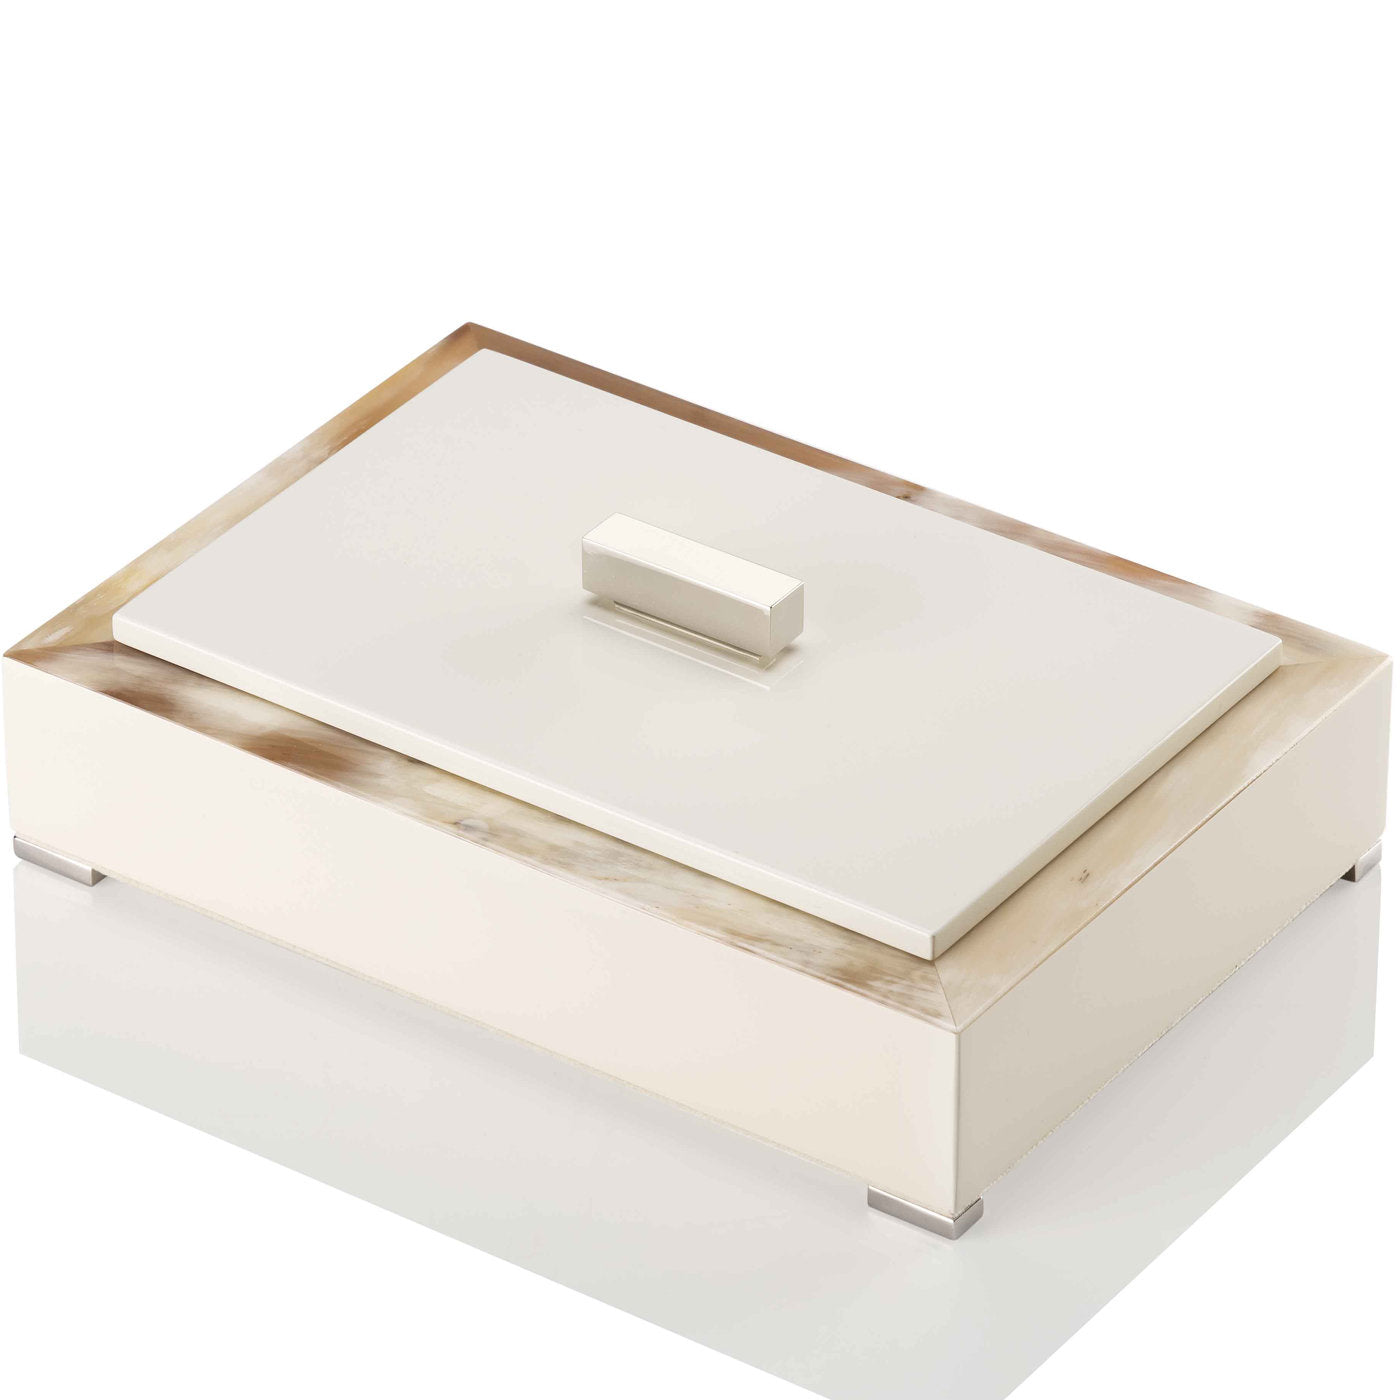 Ivory Small Storage Box - Alternative view 1